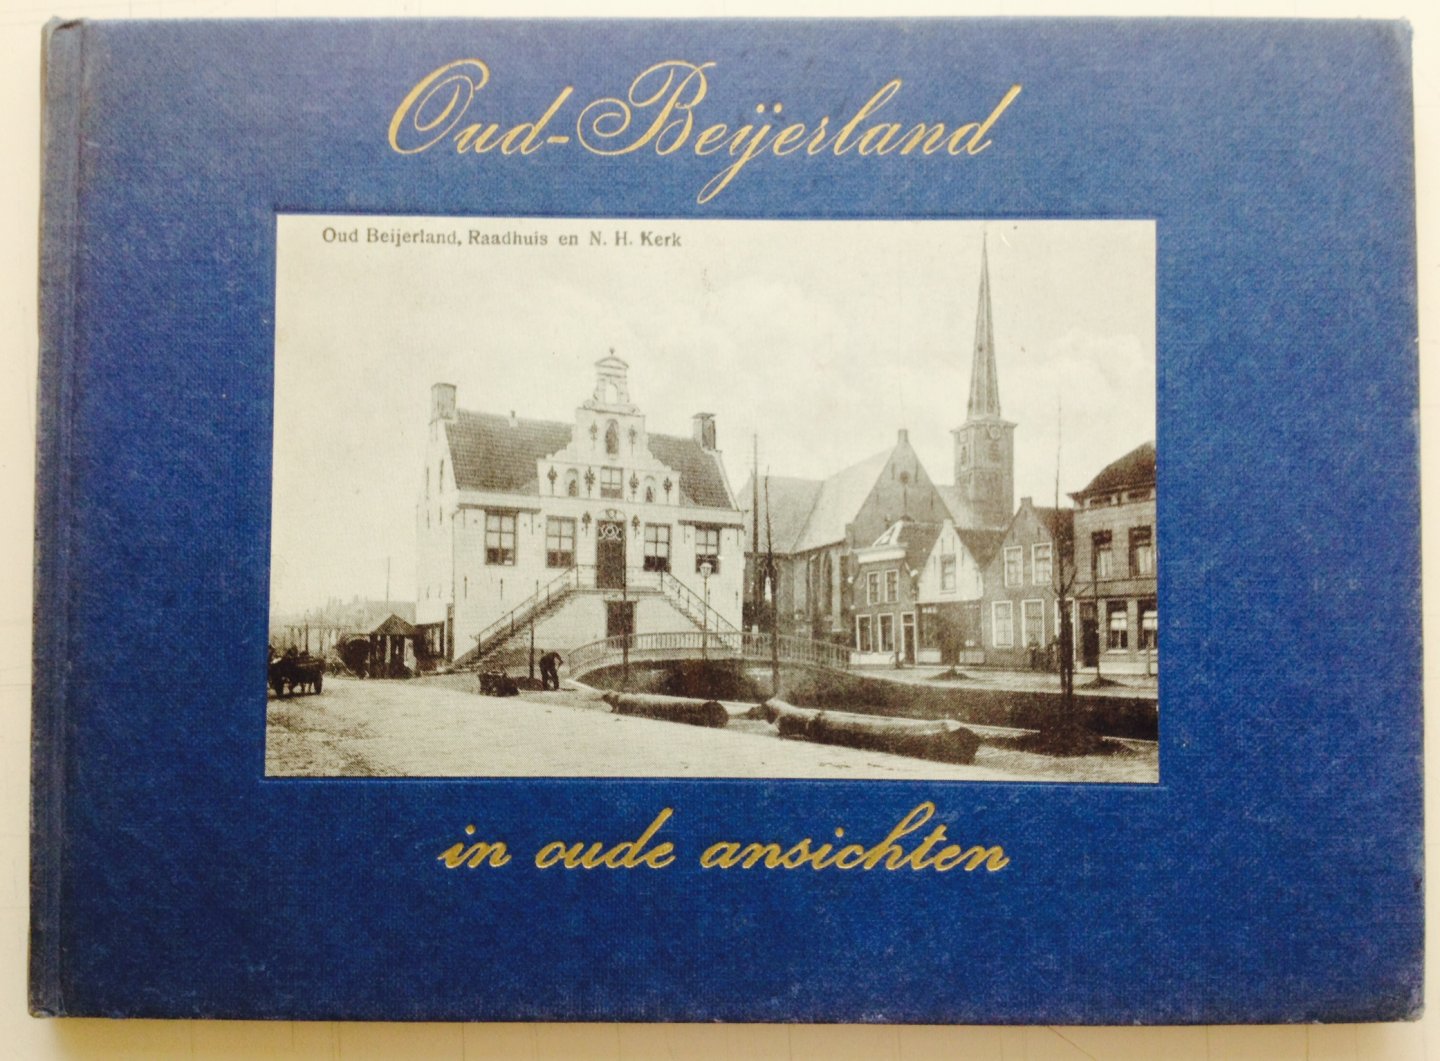 Schipper, J. - Oud Beijerland in oude ansichten.